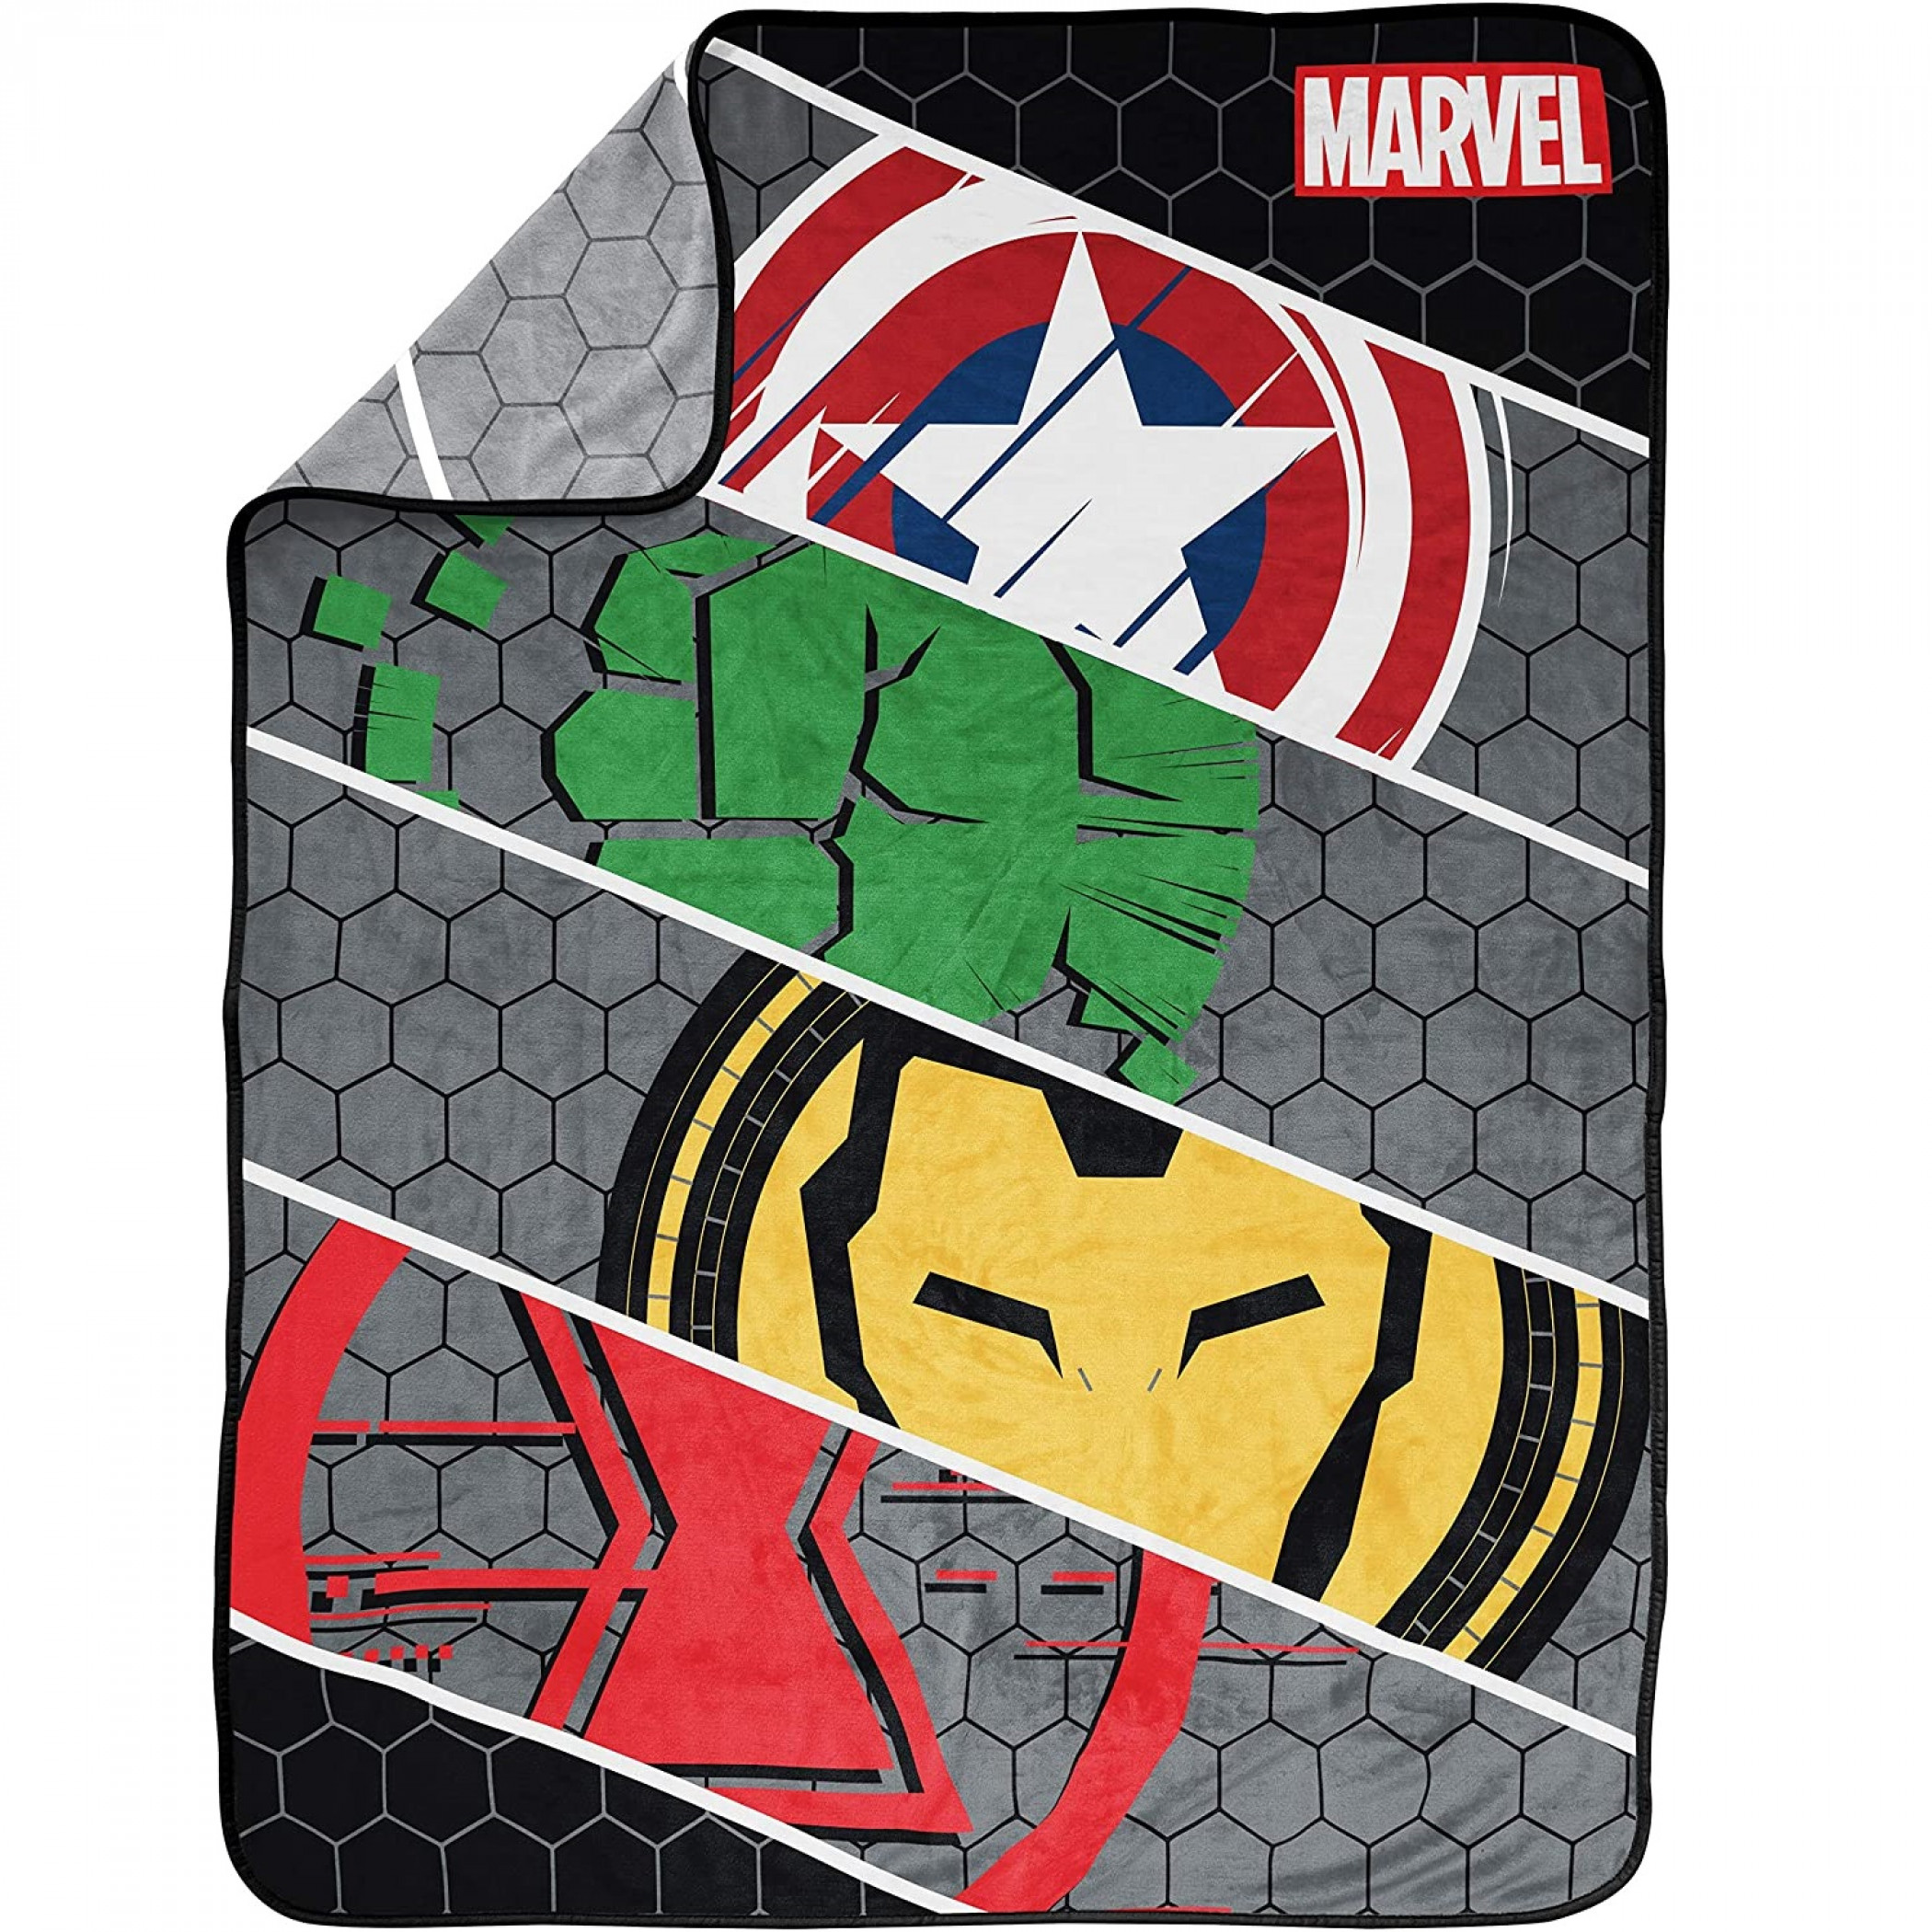 Marvel Avengers Symbols Grid 46 x 60 Throw Blanket